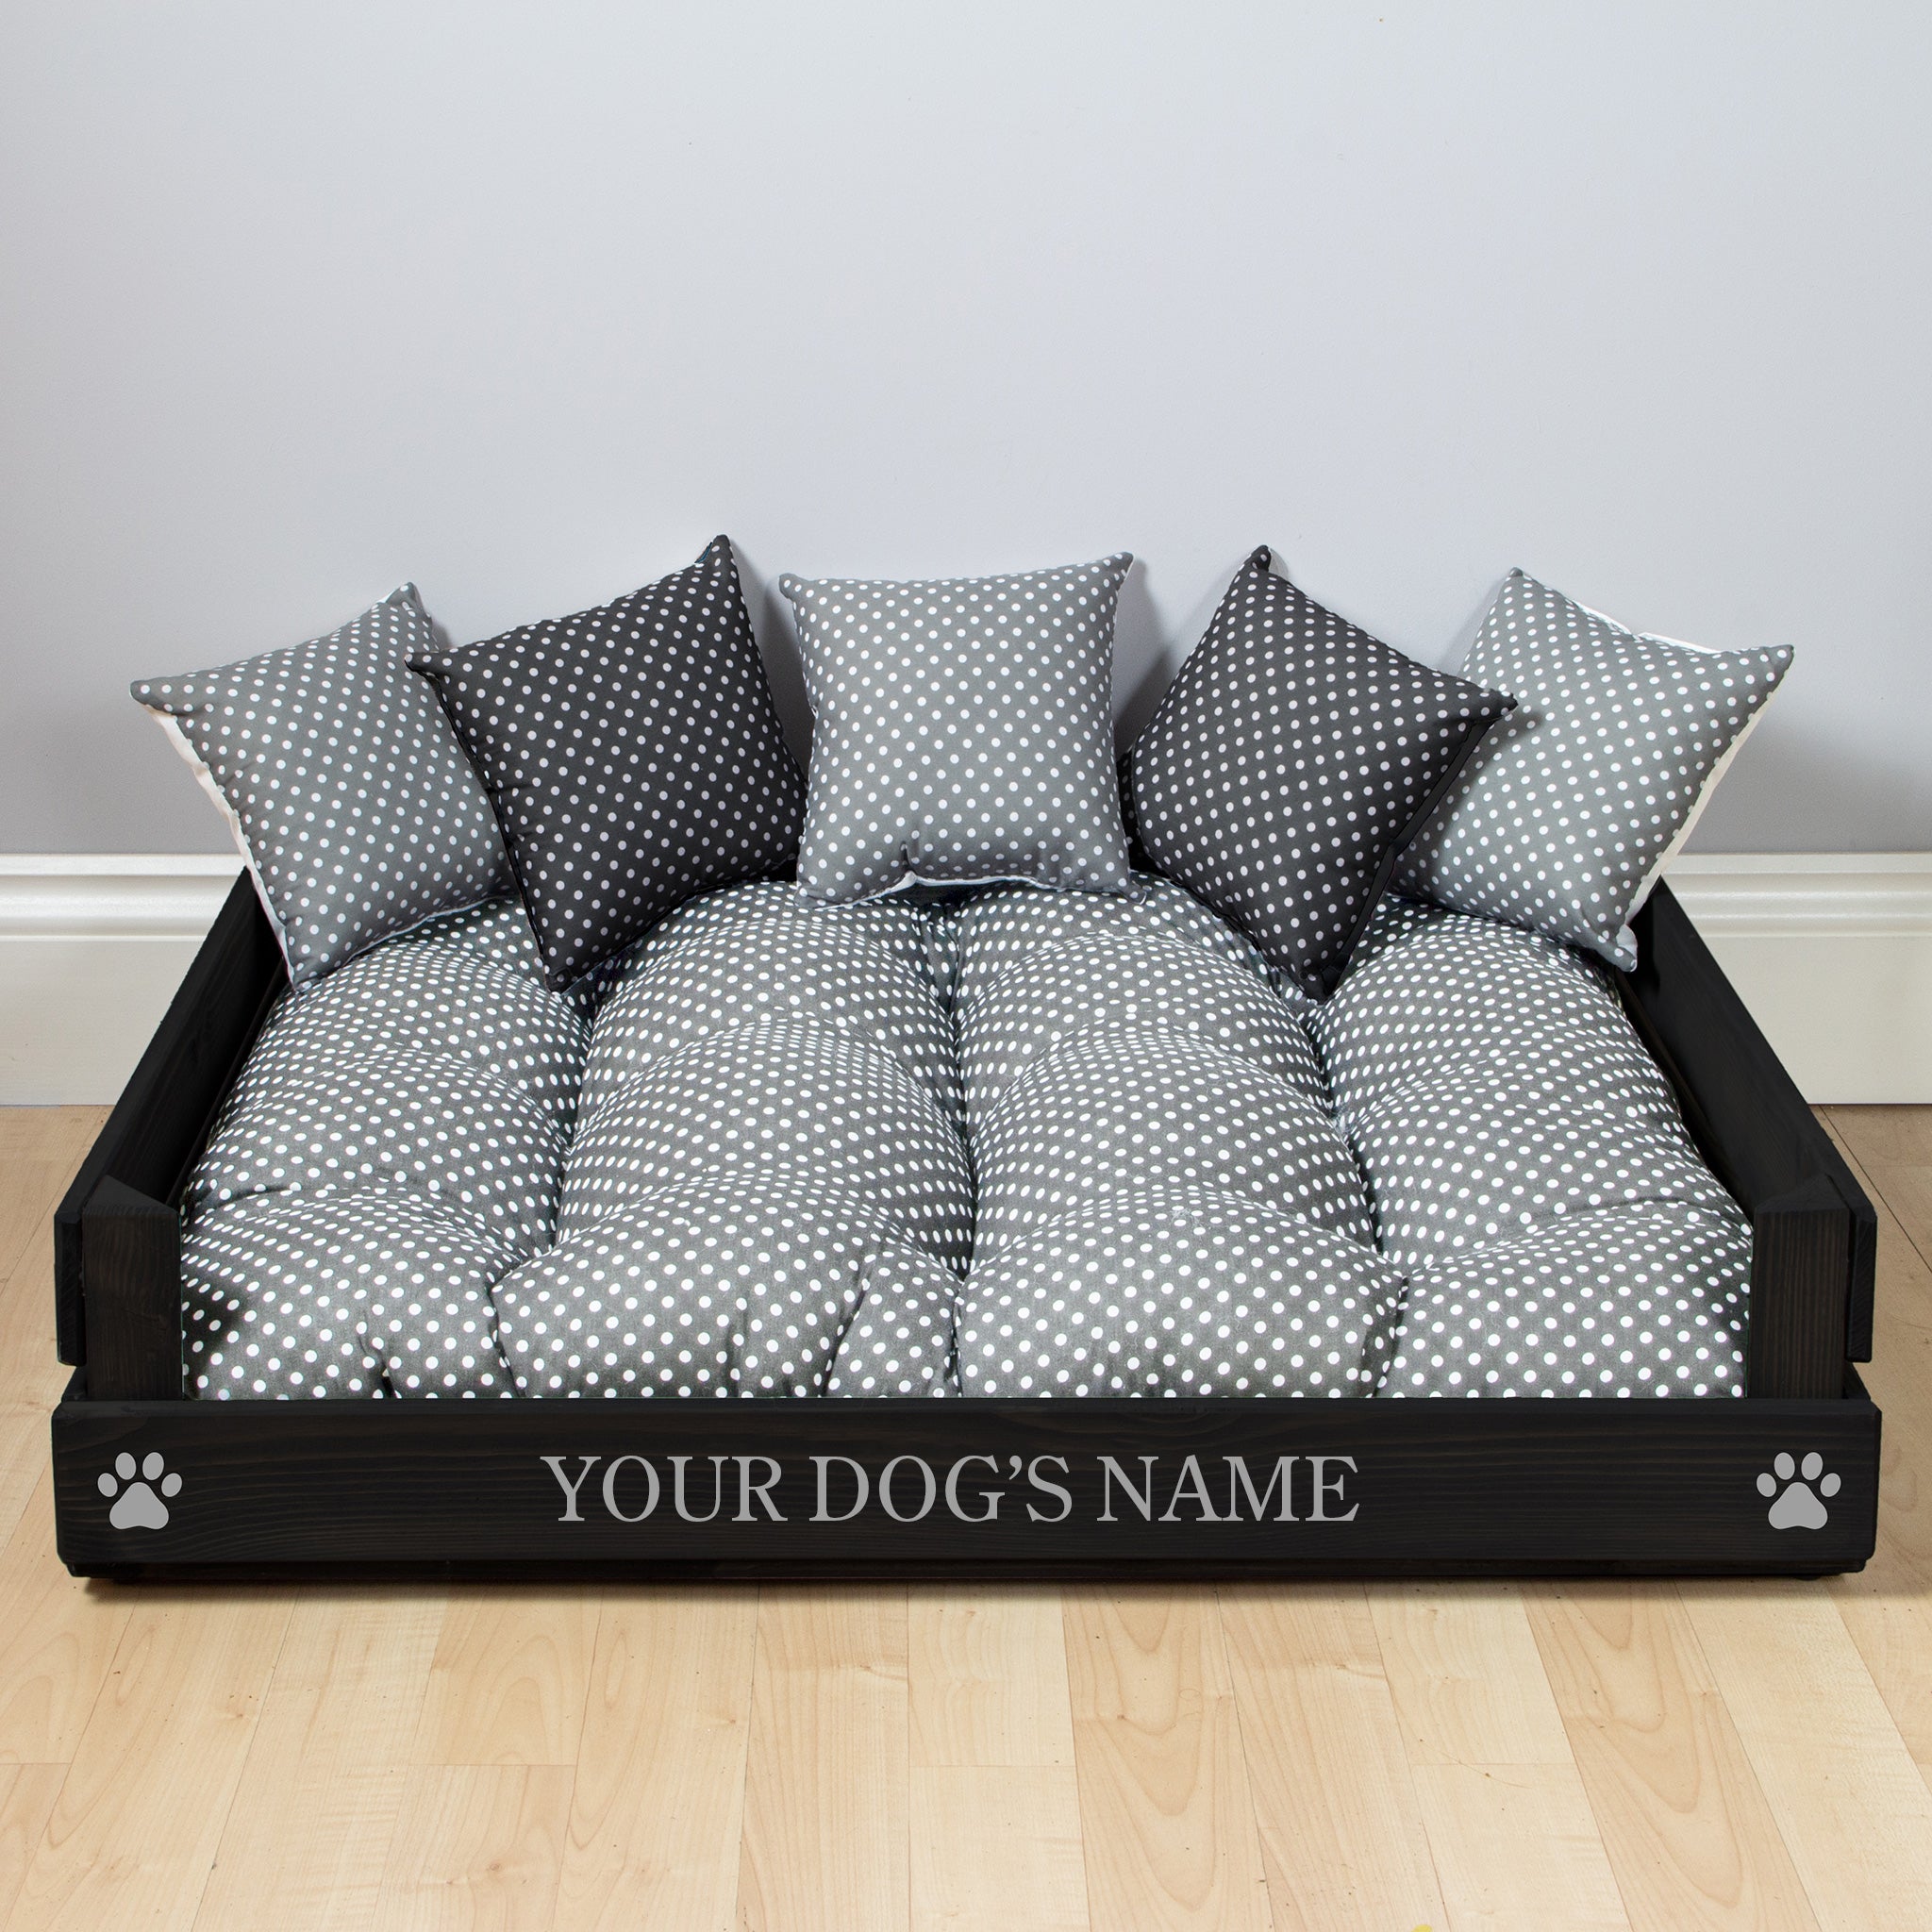 Medium Wooden Personalised Dog Bed (59 x 76cm) - Ebony Black & Grey Polka Dot